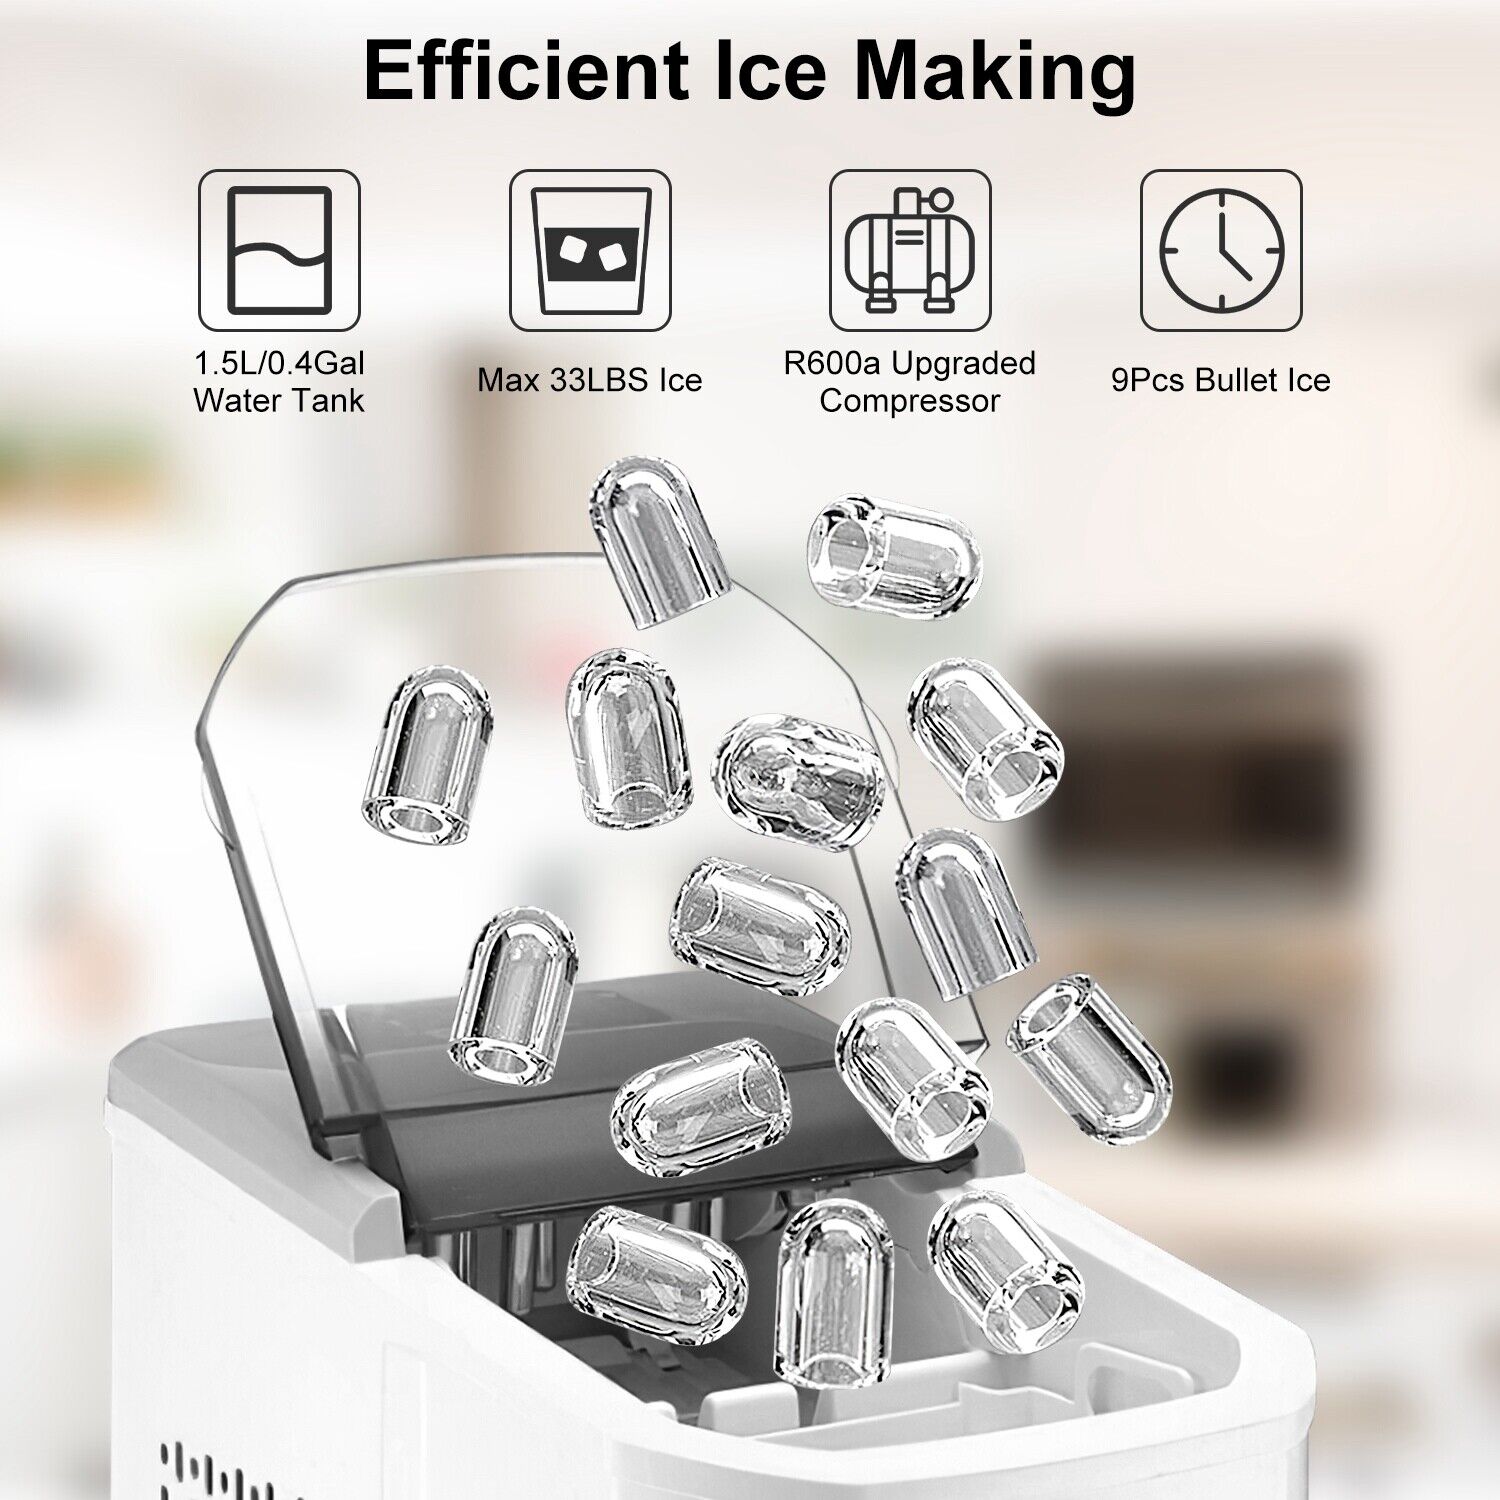 imountek Ice Maker Machine Electric Countertop Self-cleaning Ice Making Machine Portable